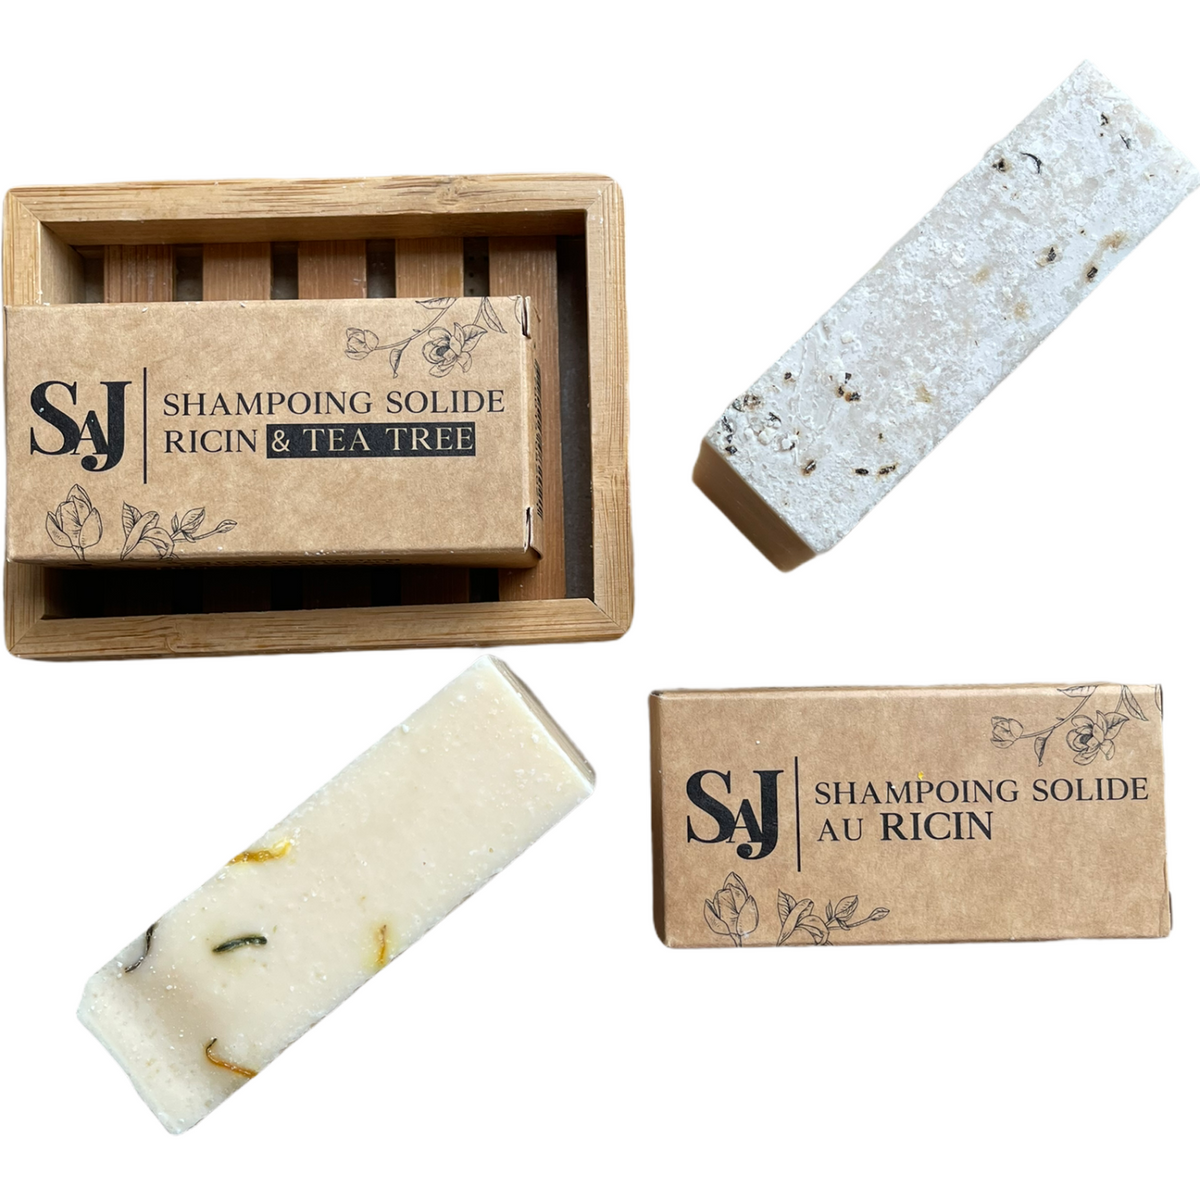 savon jura organic soap and shampoo gift set 